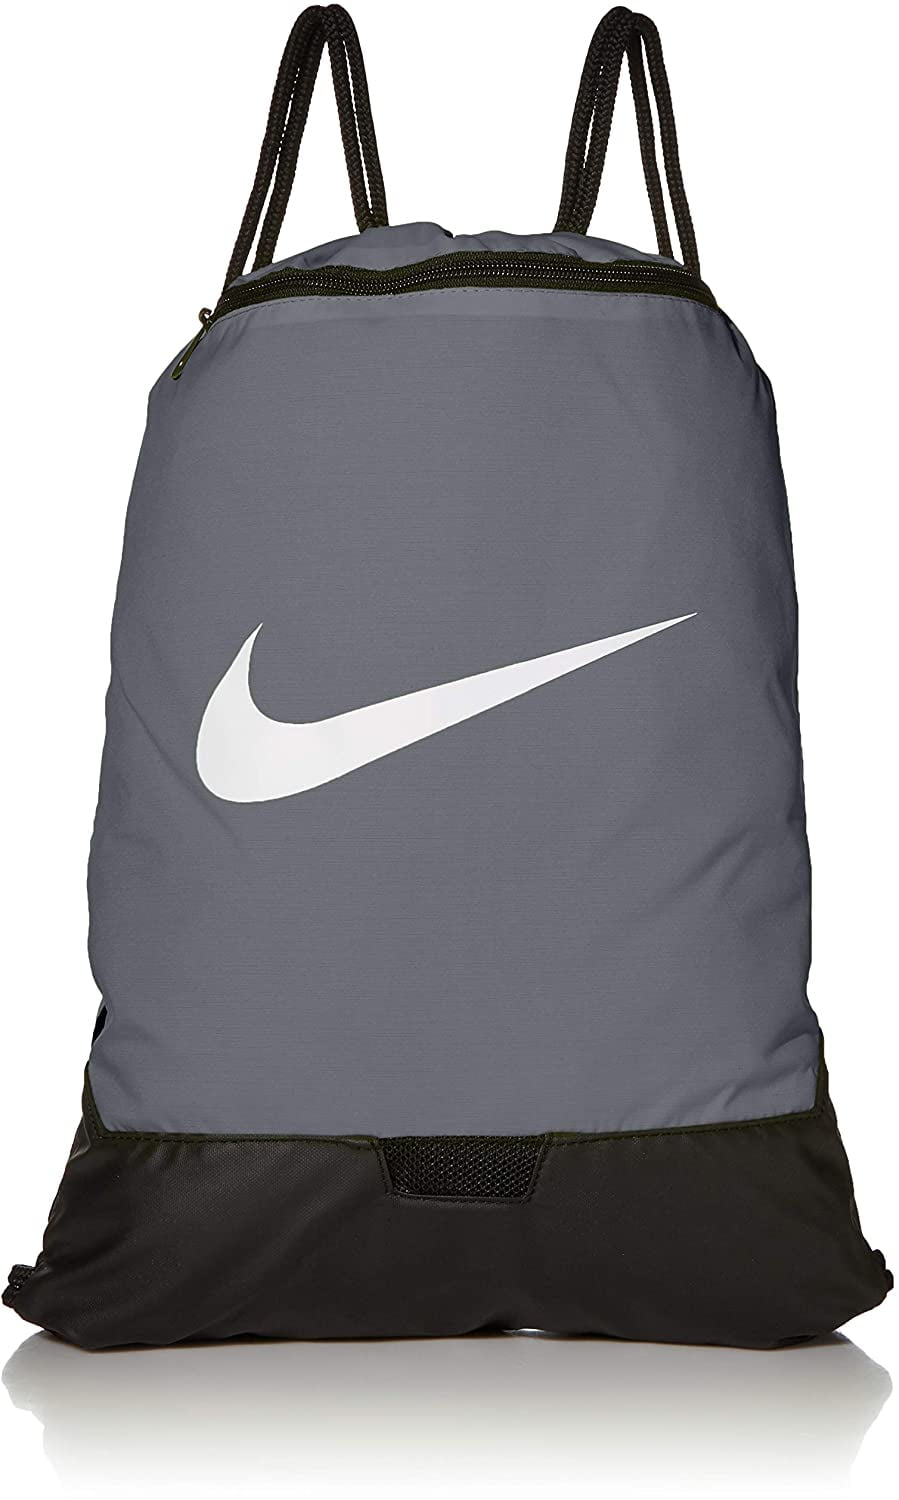 nike drawstring backpack with zipper